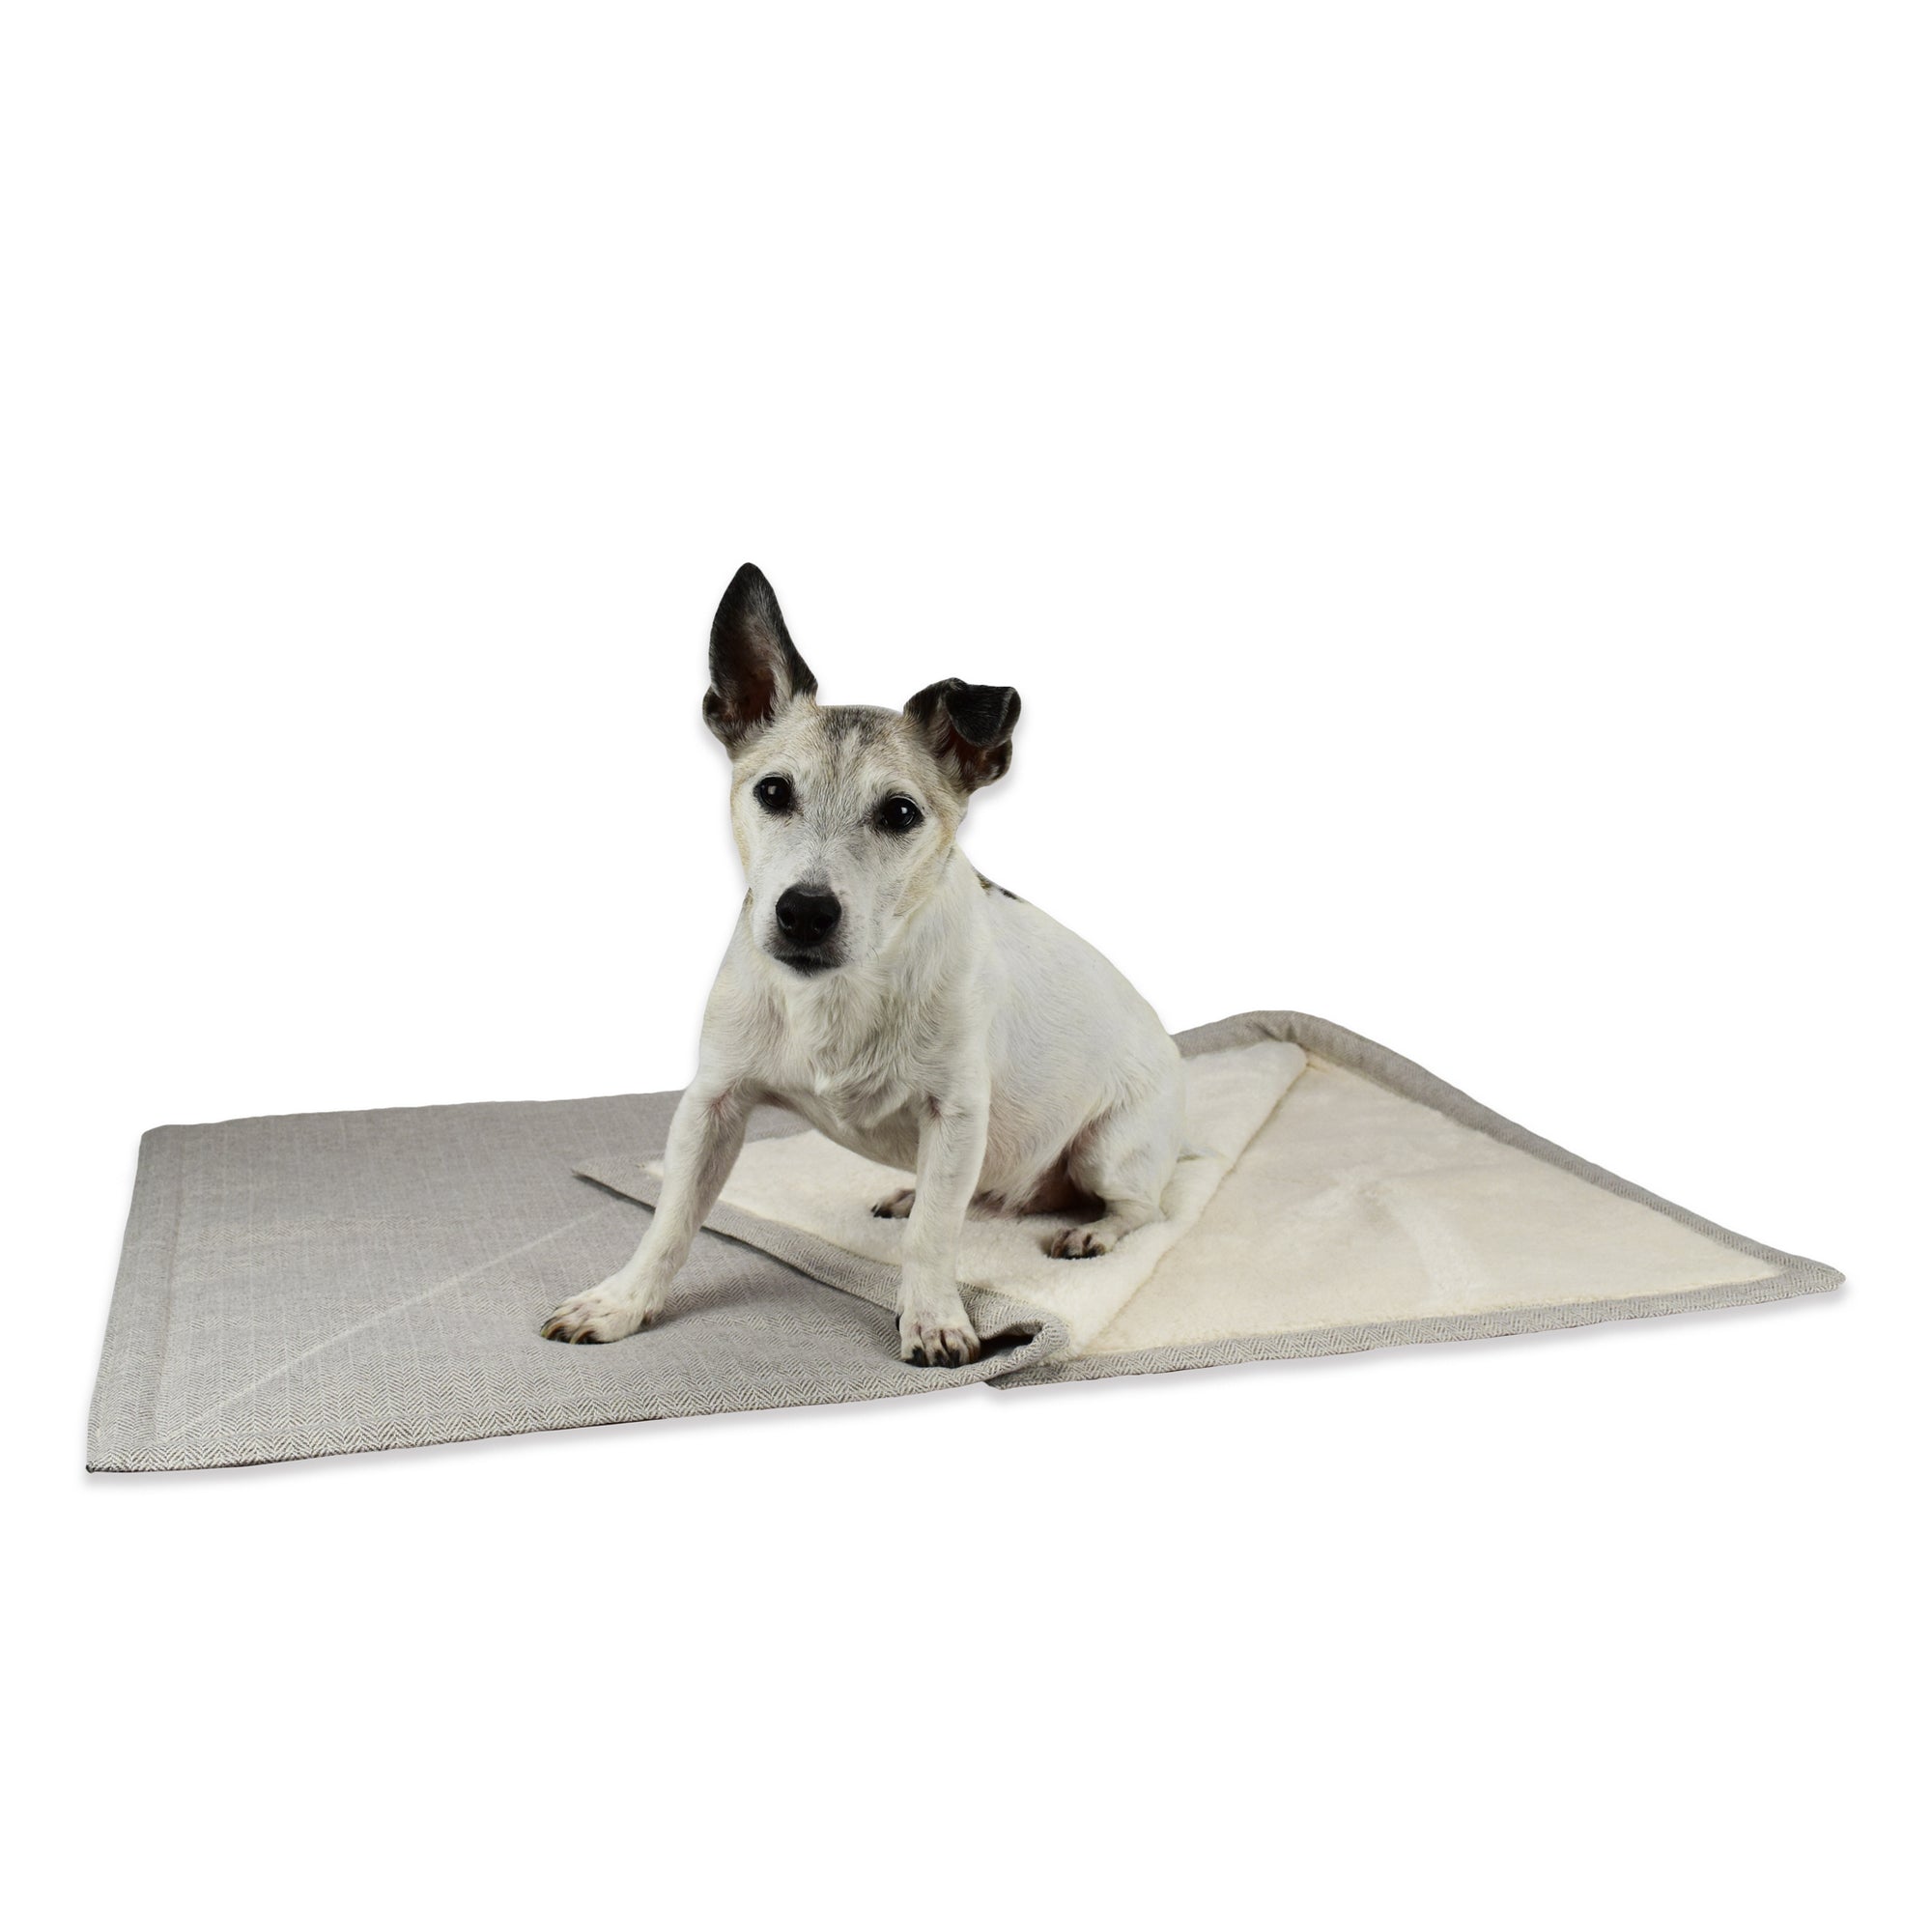 Kona the Jack Russel Terrier enjoys doing yoga on his Cream Herringbone Furniture Blanket with super soft Sherpa fleece lining